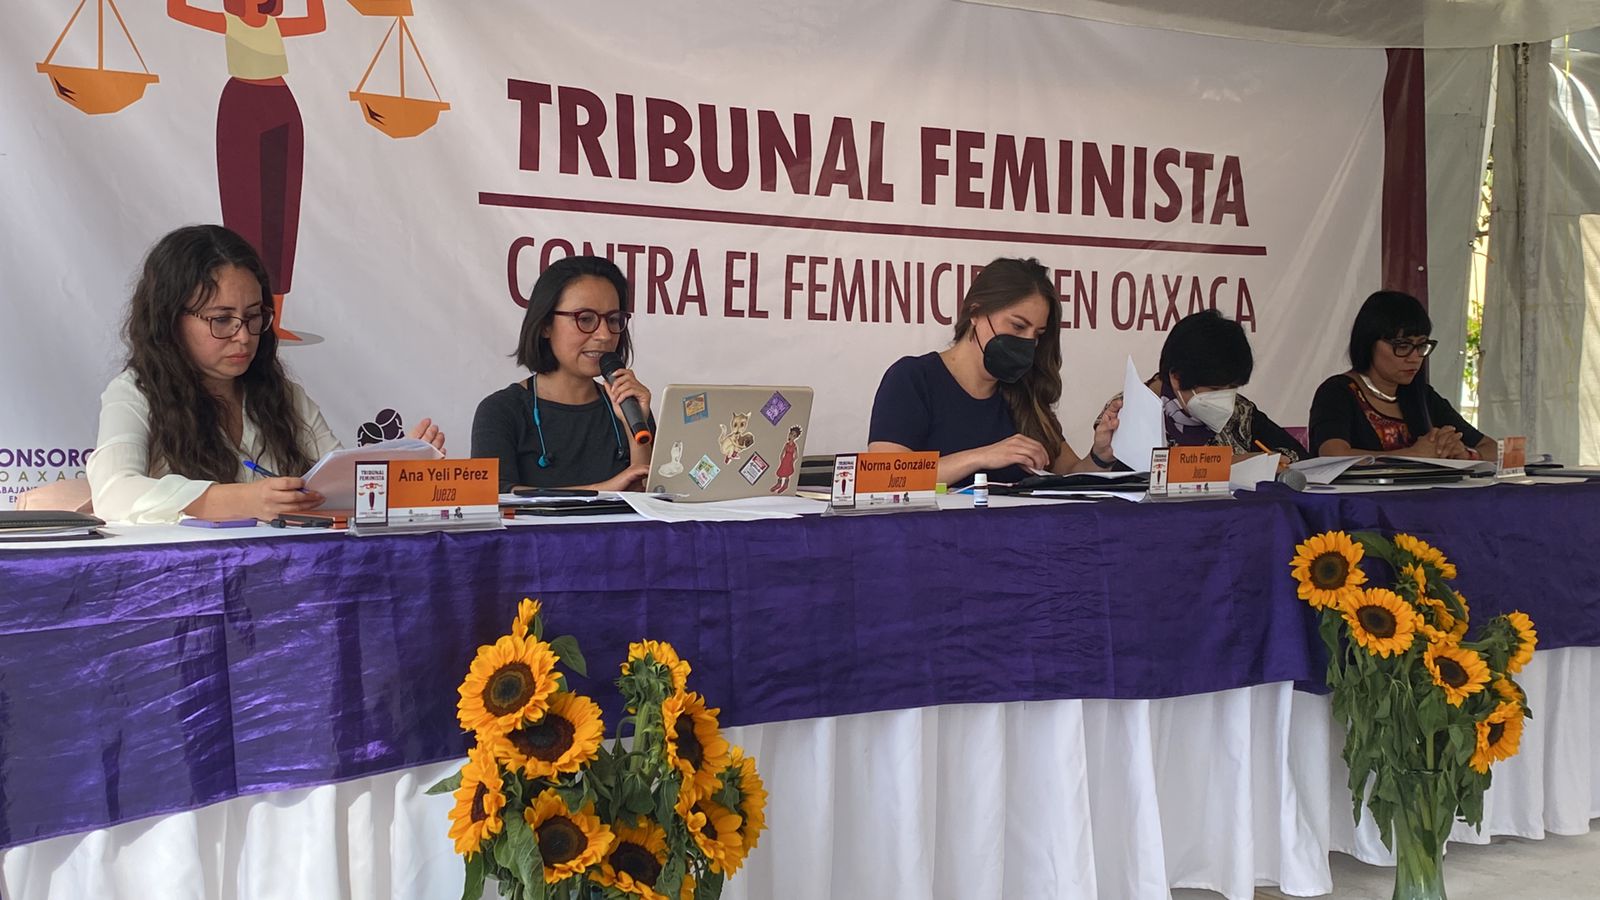 Tribunal Feminista contra la Violencia Feminicida emite sentencia sobre siete casos de feminicidio en Oaxaca